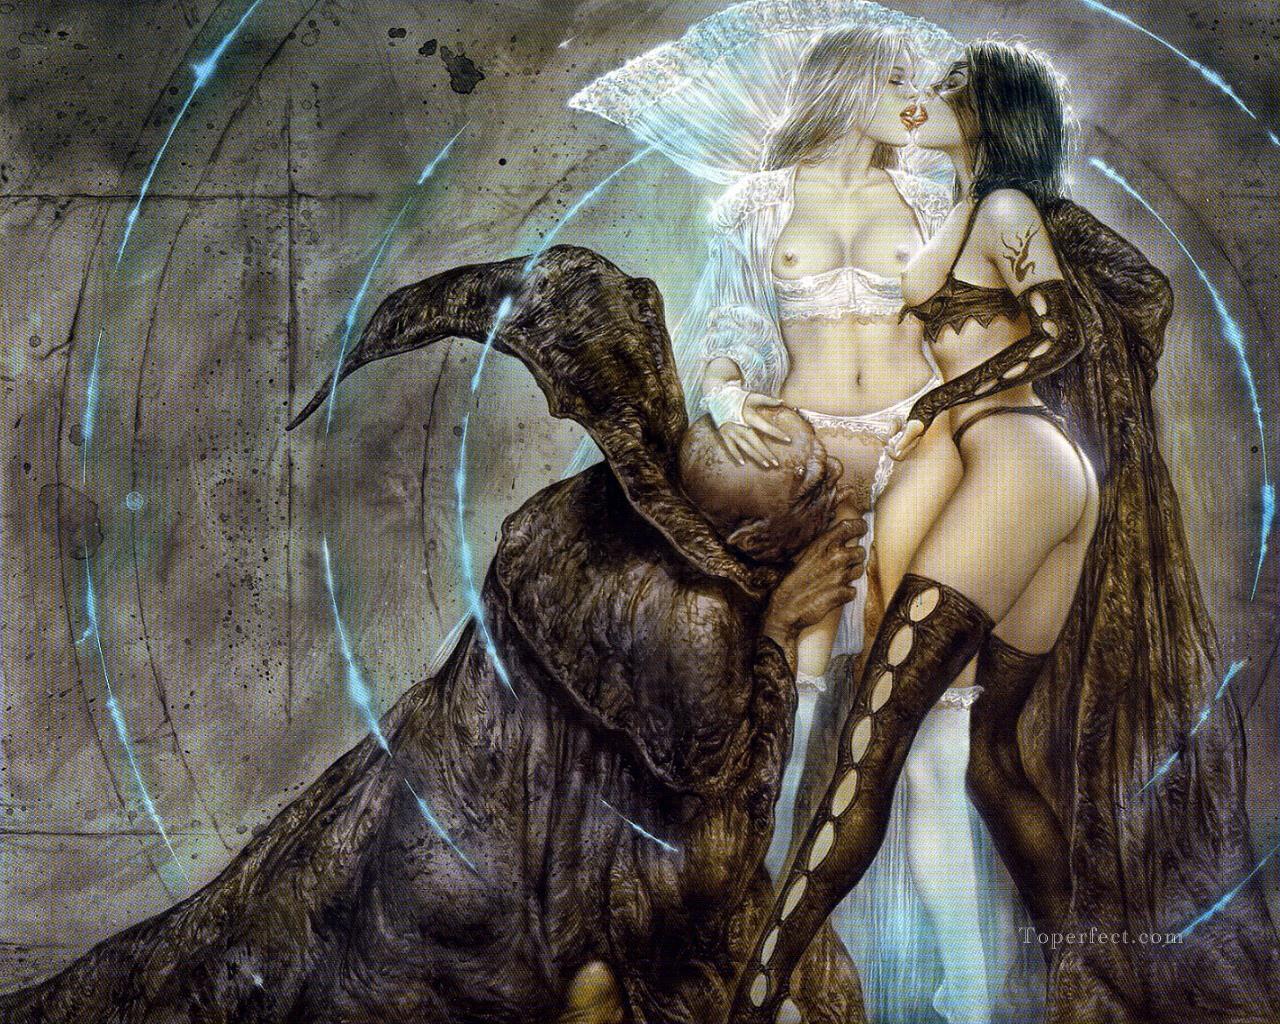 Erotic fantasy art poster naked video